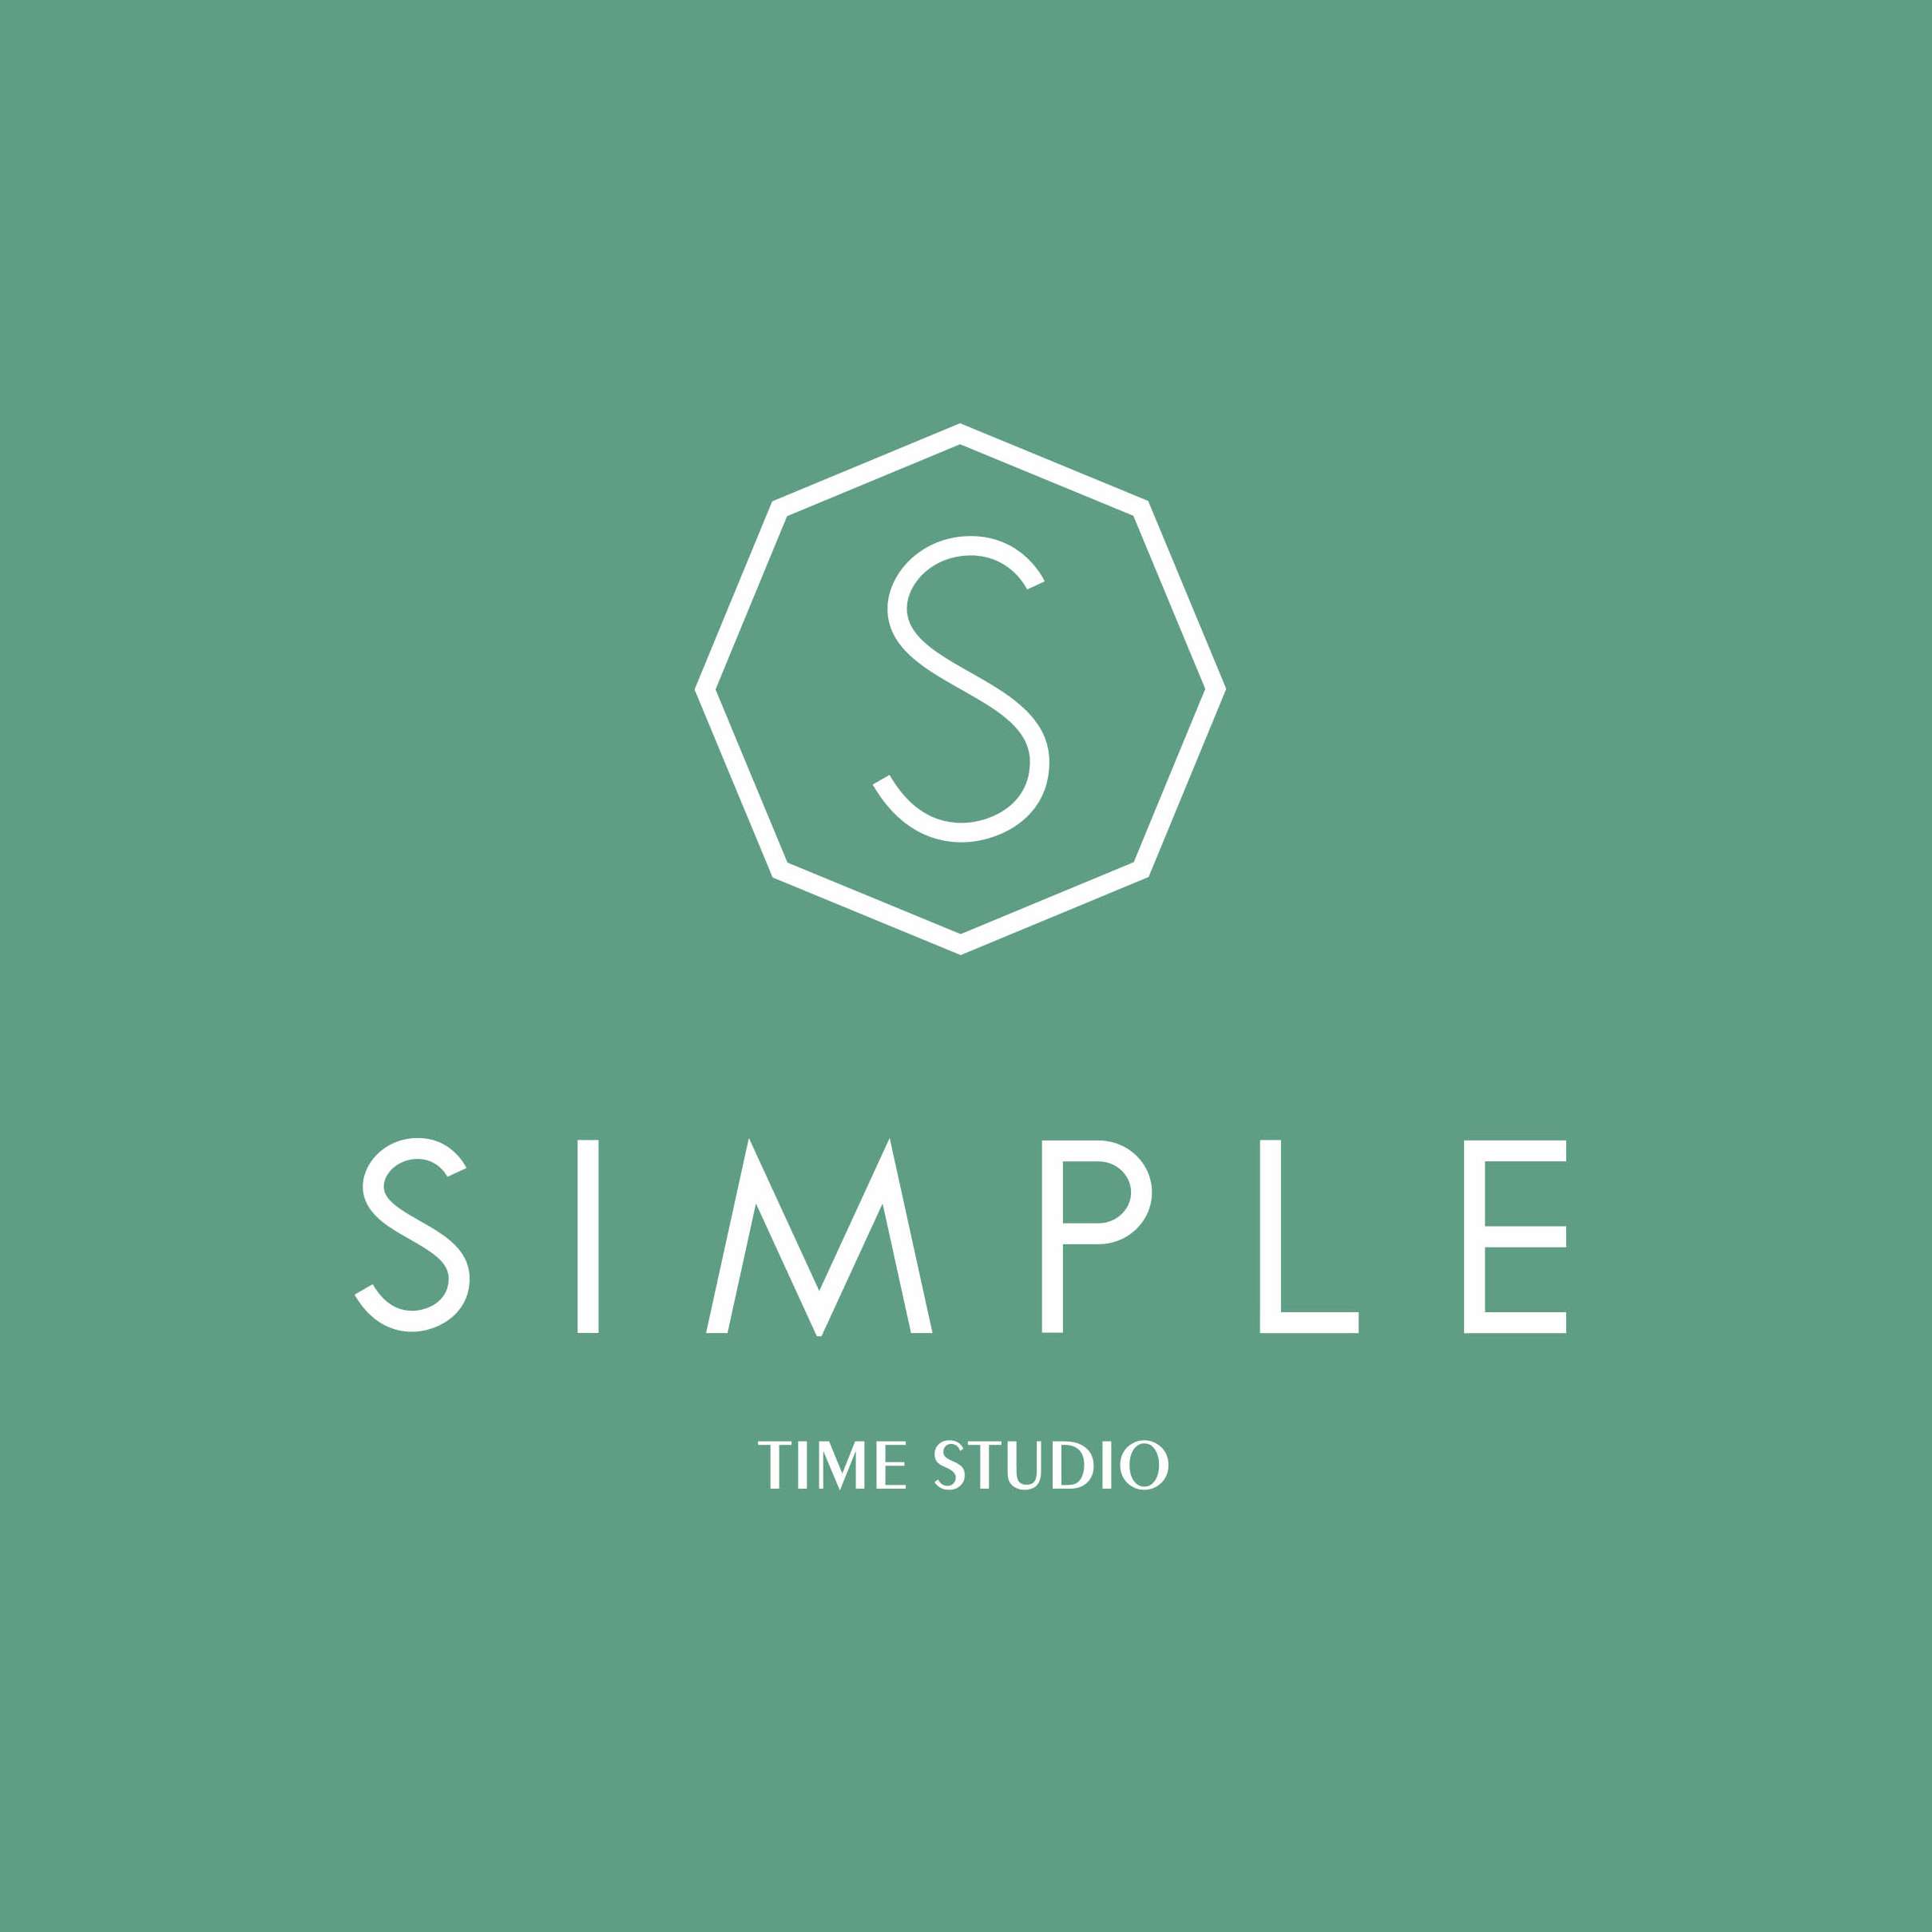 SIMPLE TIME STUDIO 